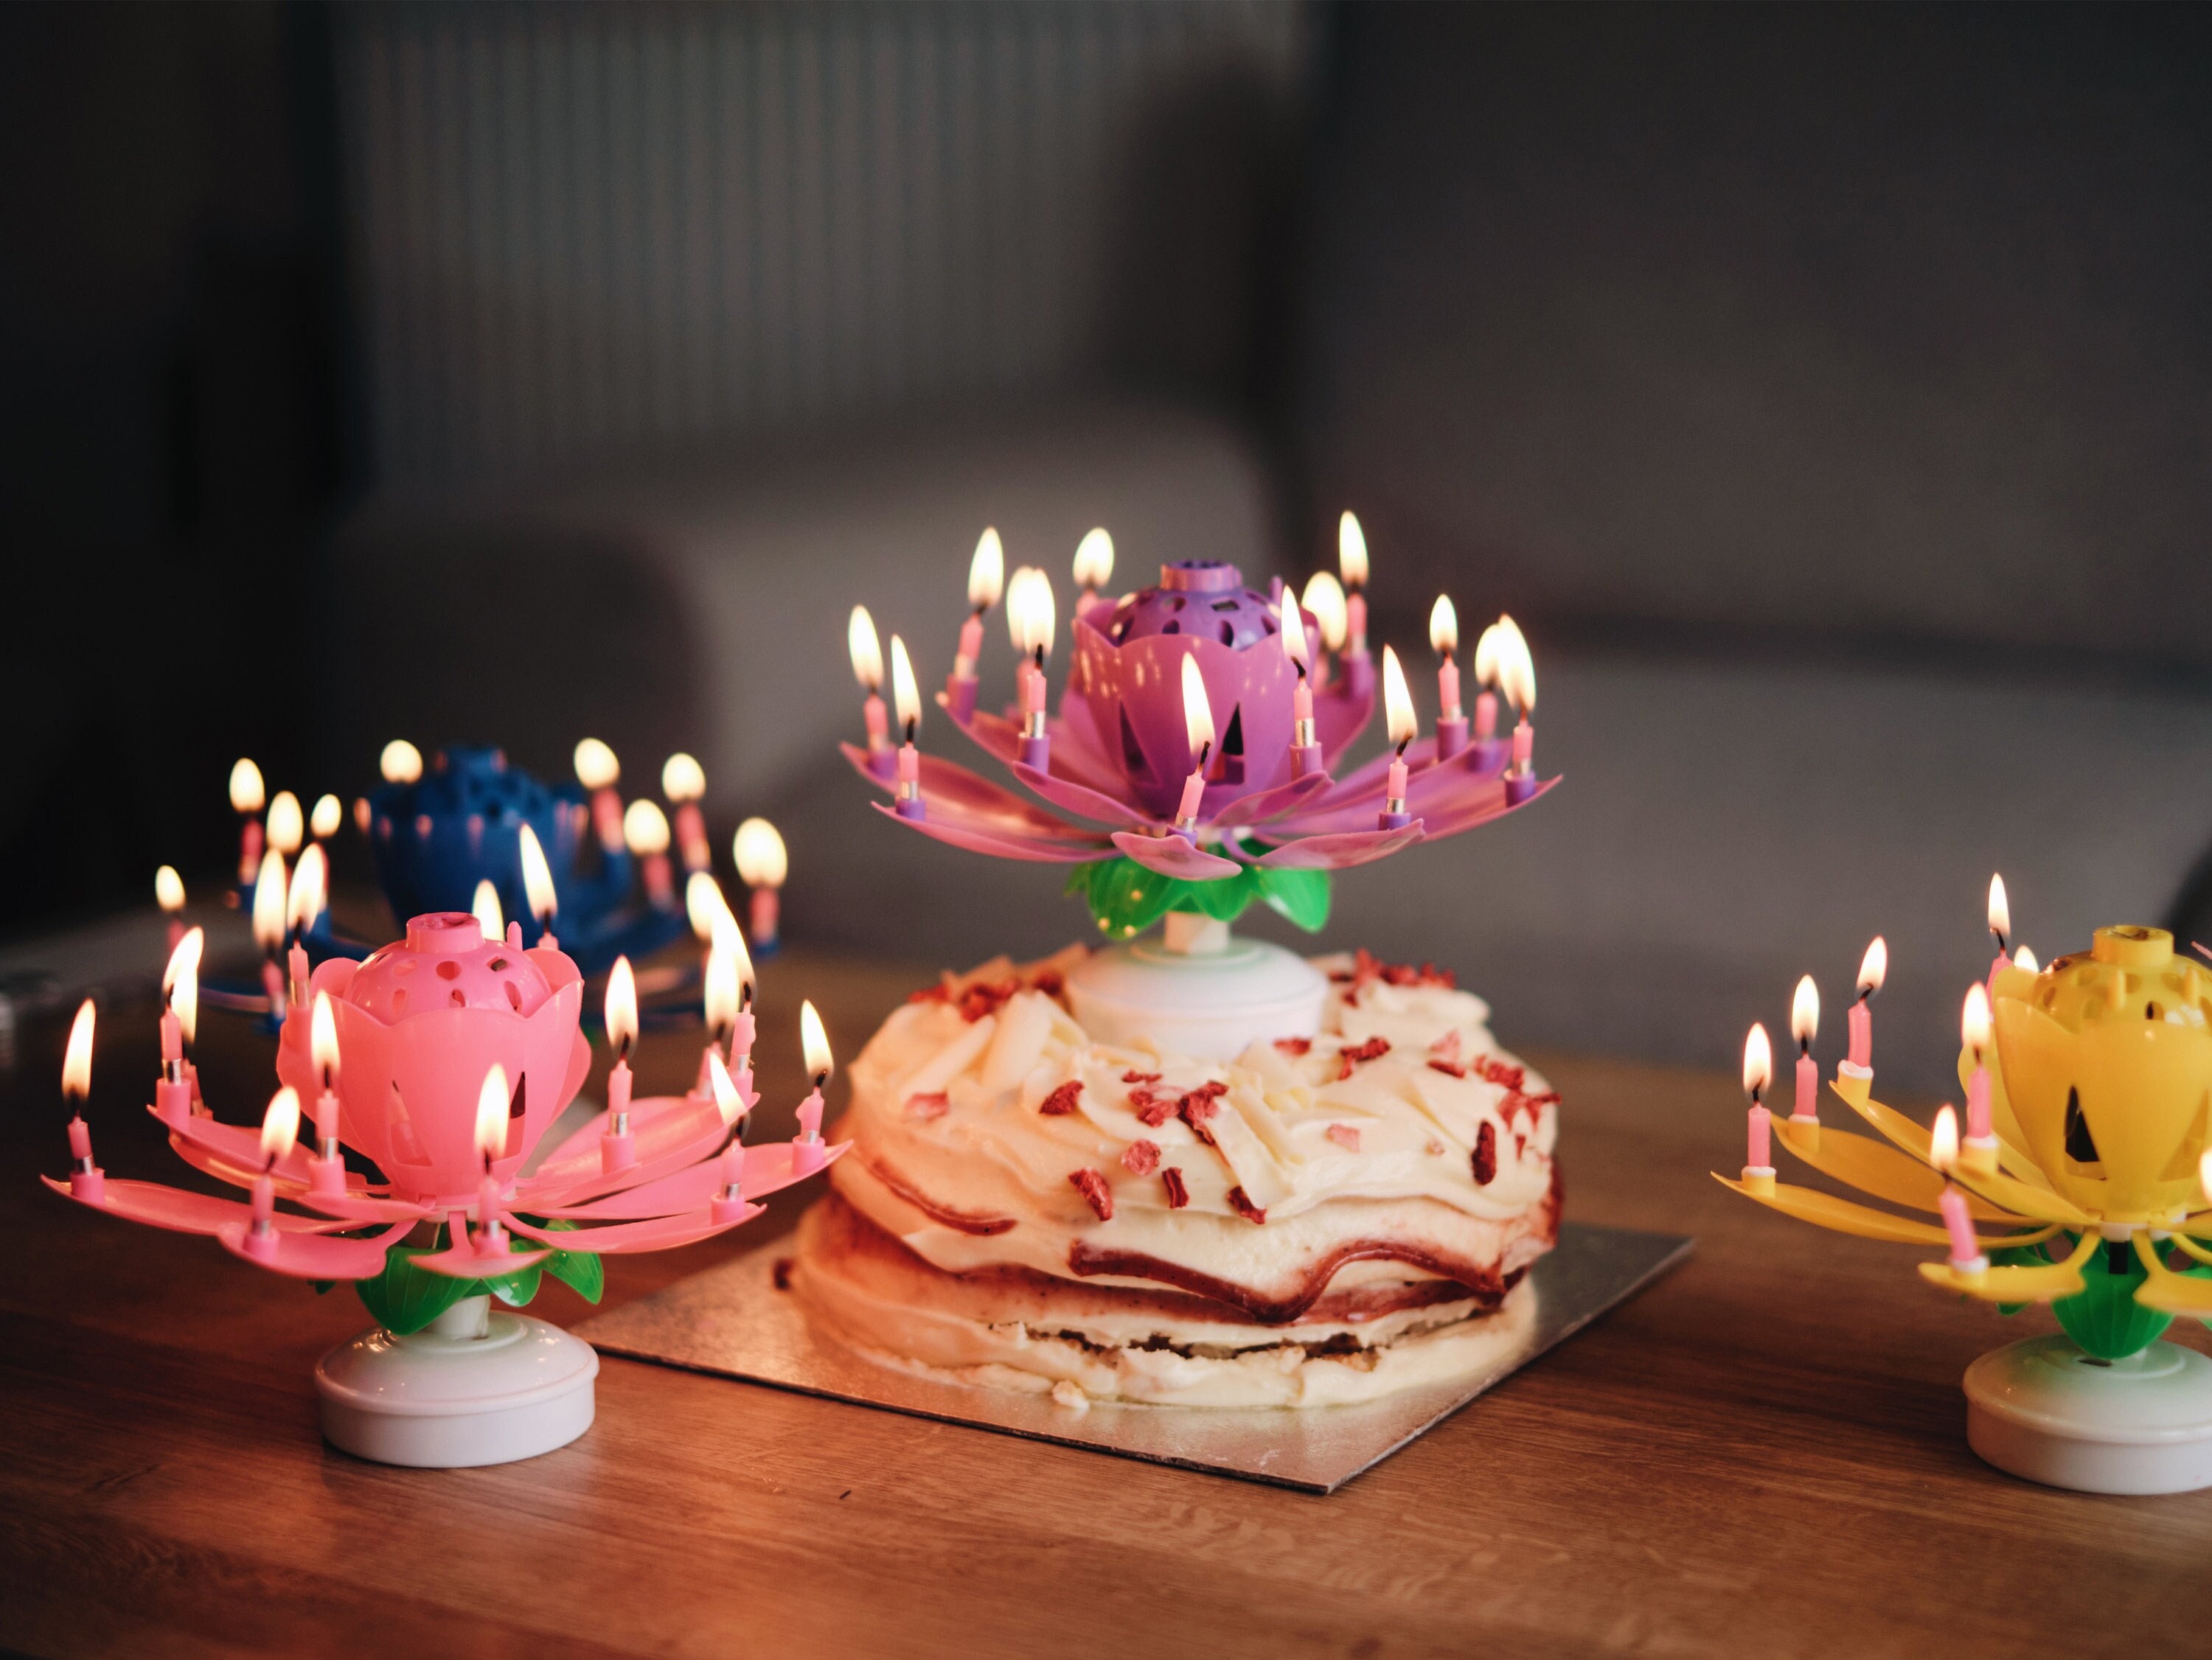 Lotus Candle Rotating Lotus Birthday Candle Cake Cupcake Candle LED Festive  Electric Flower Candle Singing Candle-Powered